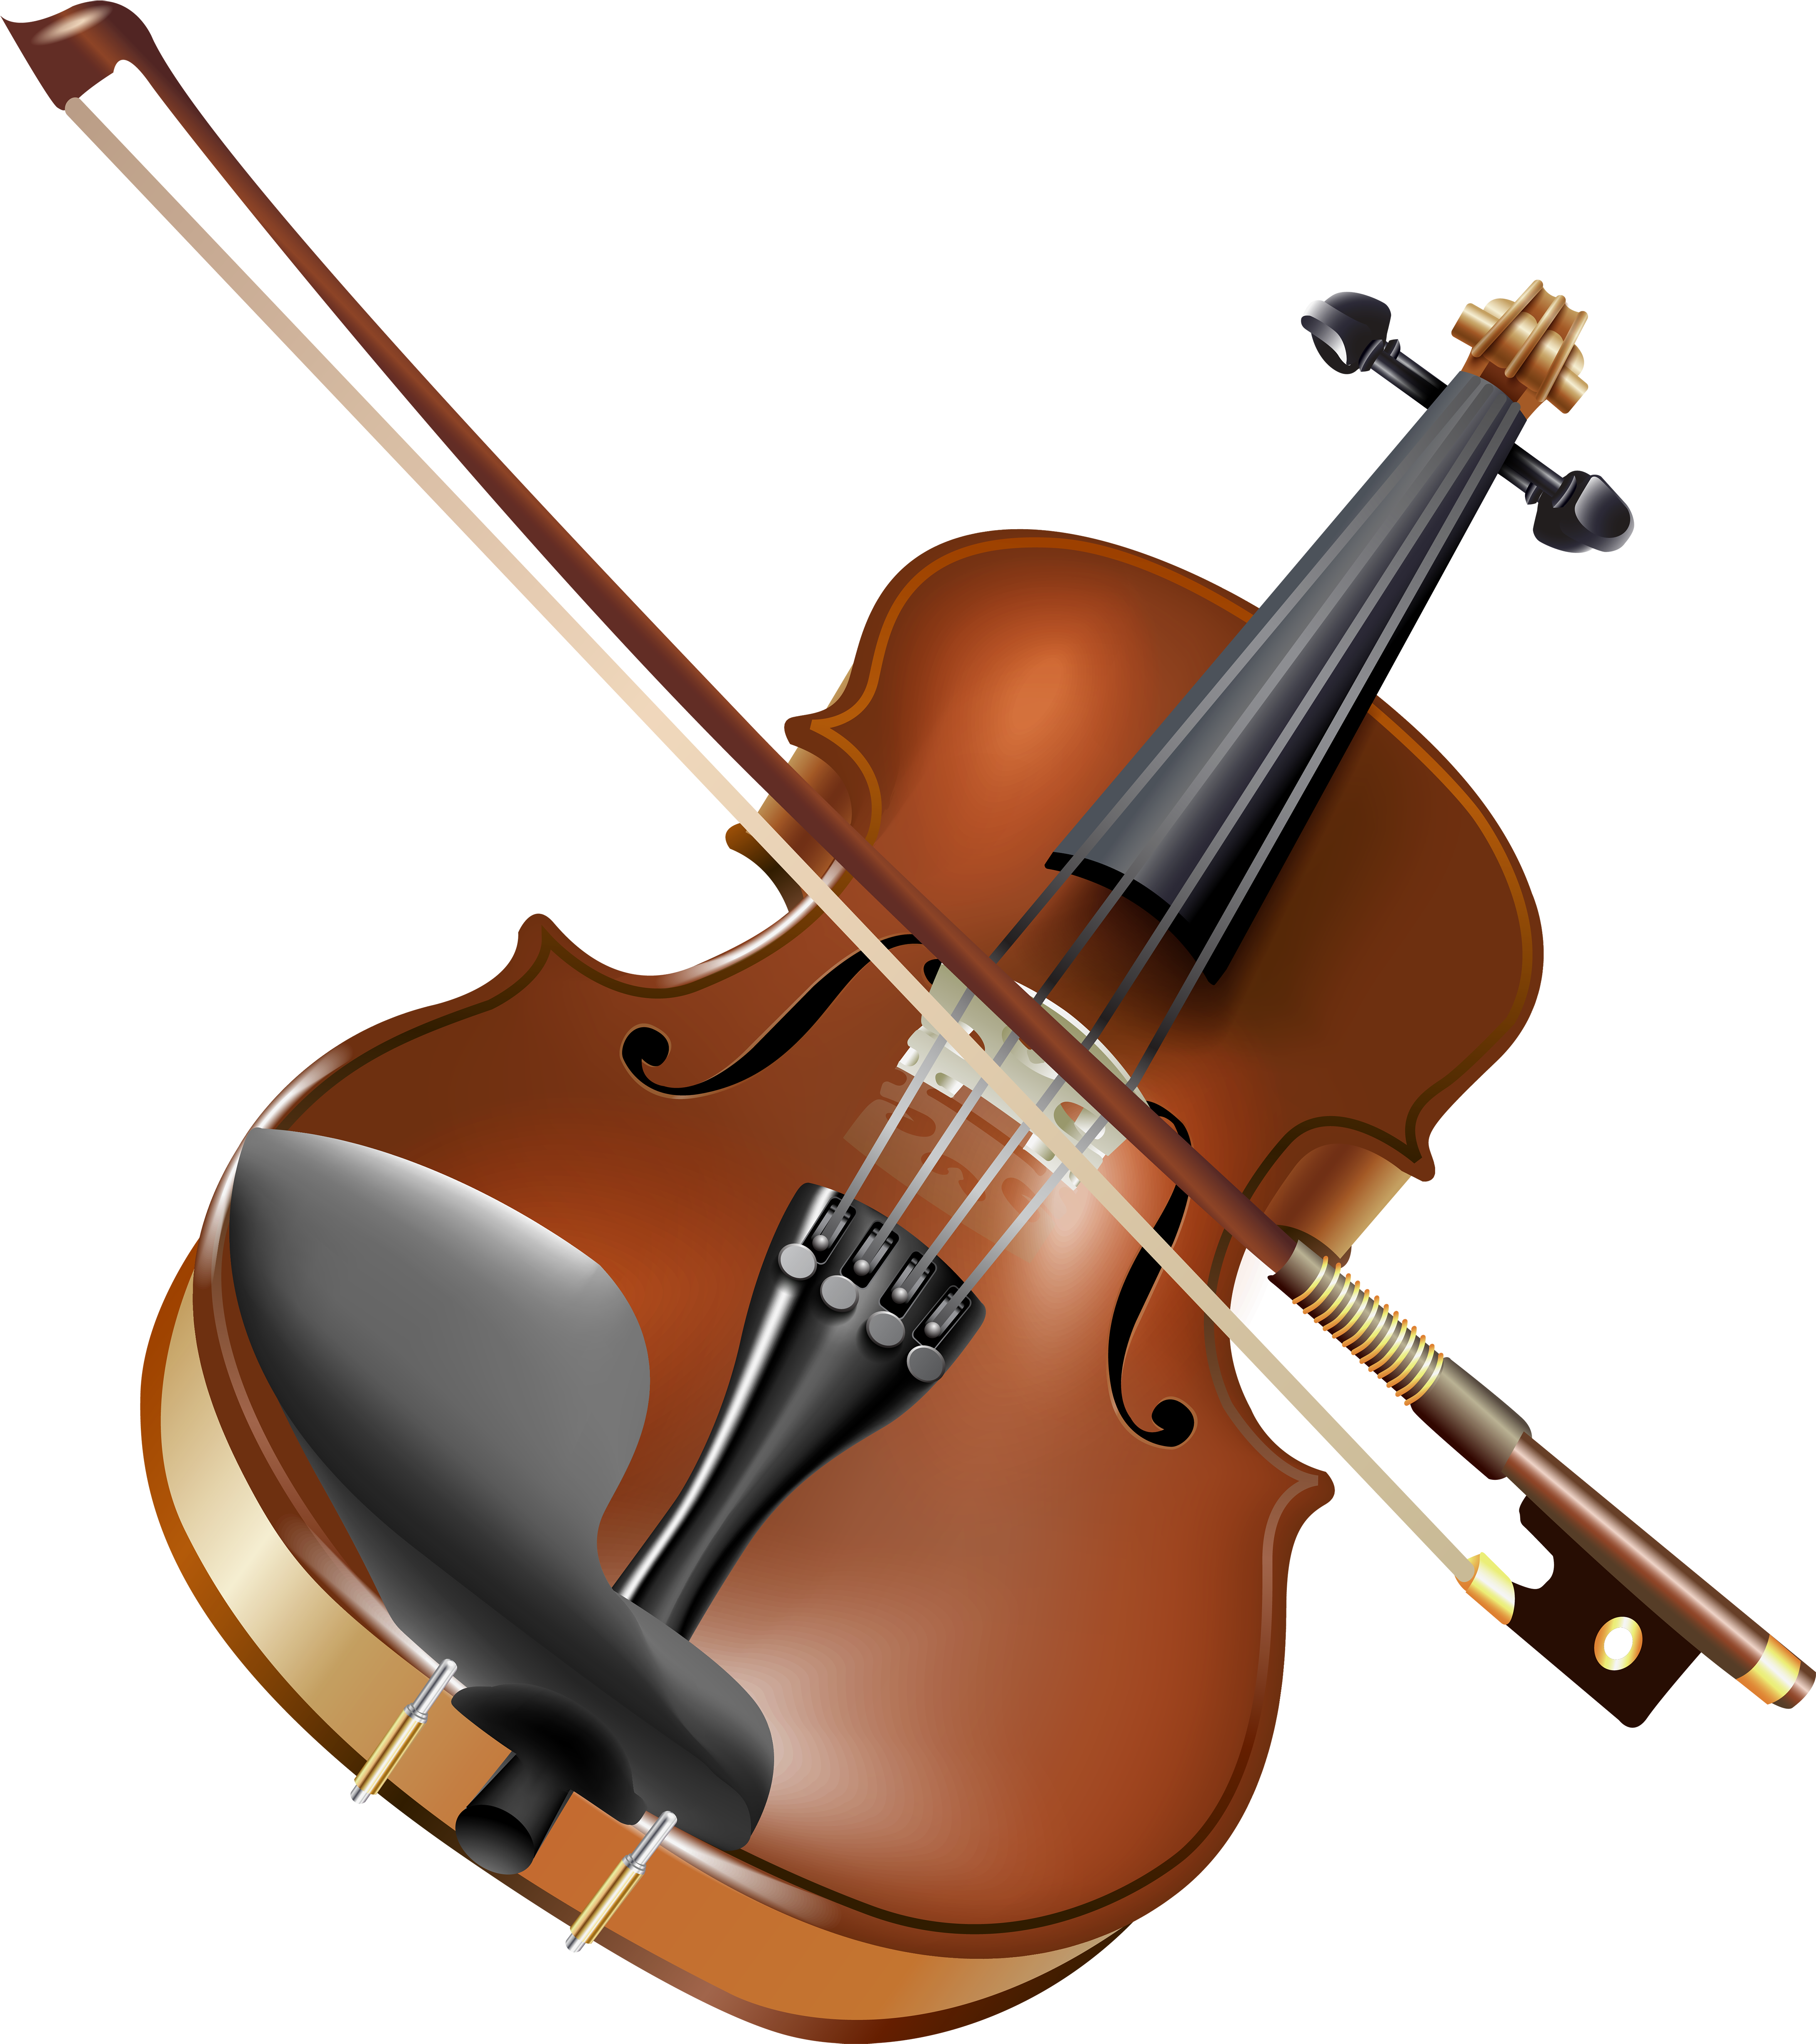 Classic Violinand Bow Illustration